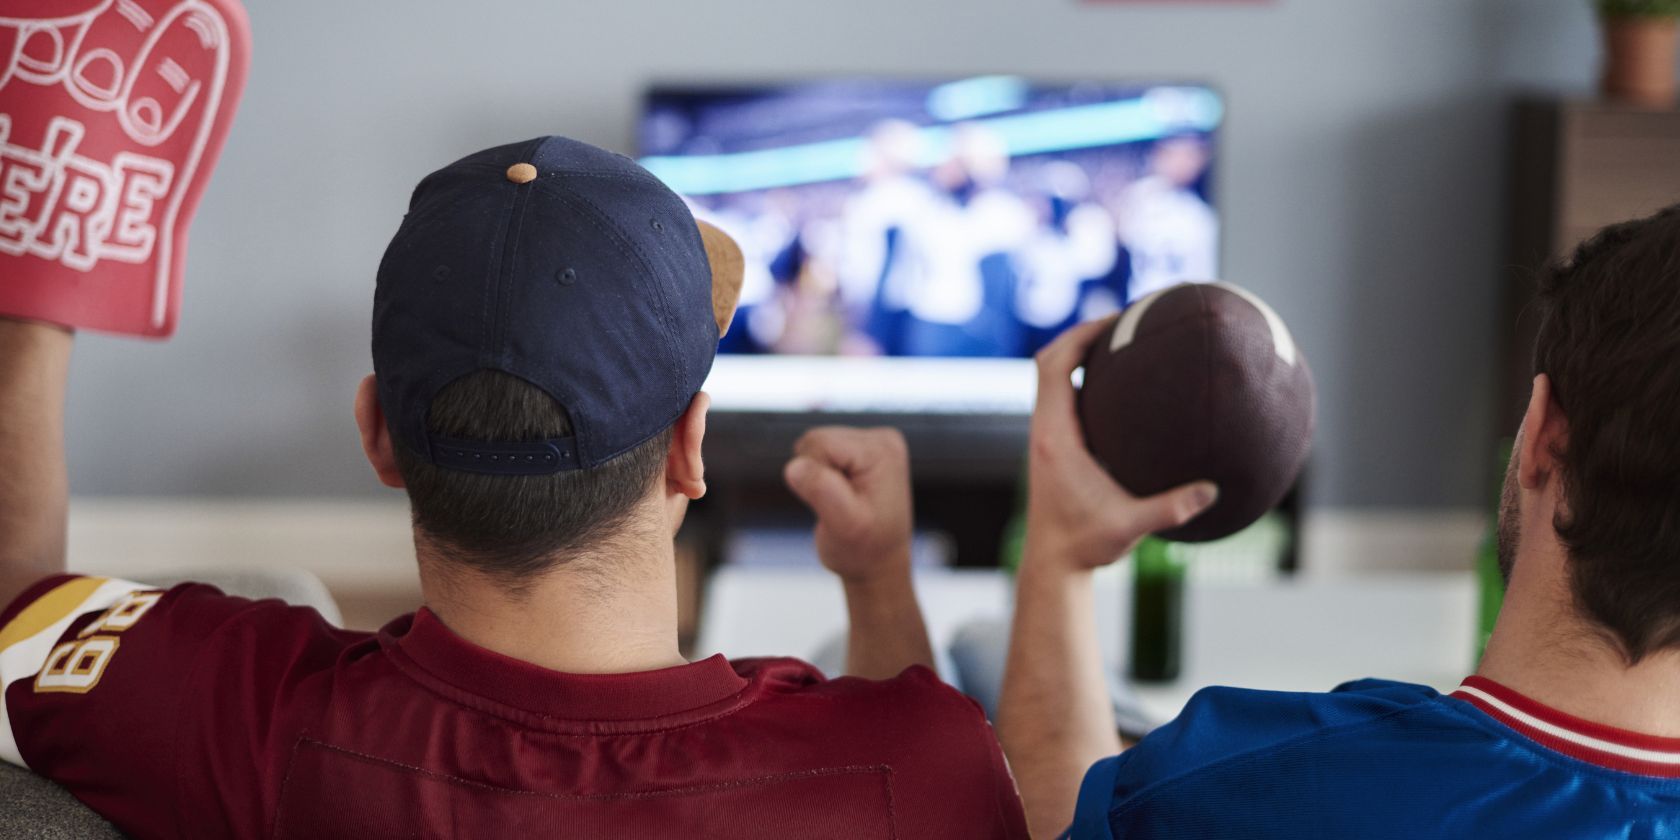 two men watching american football